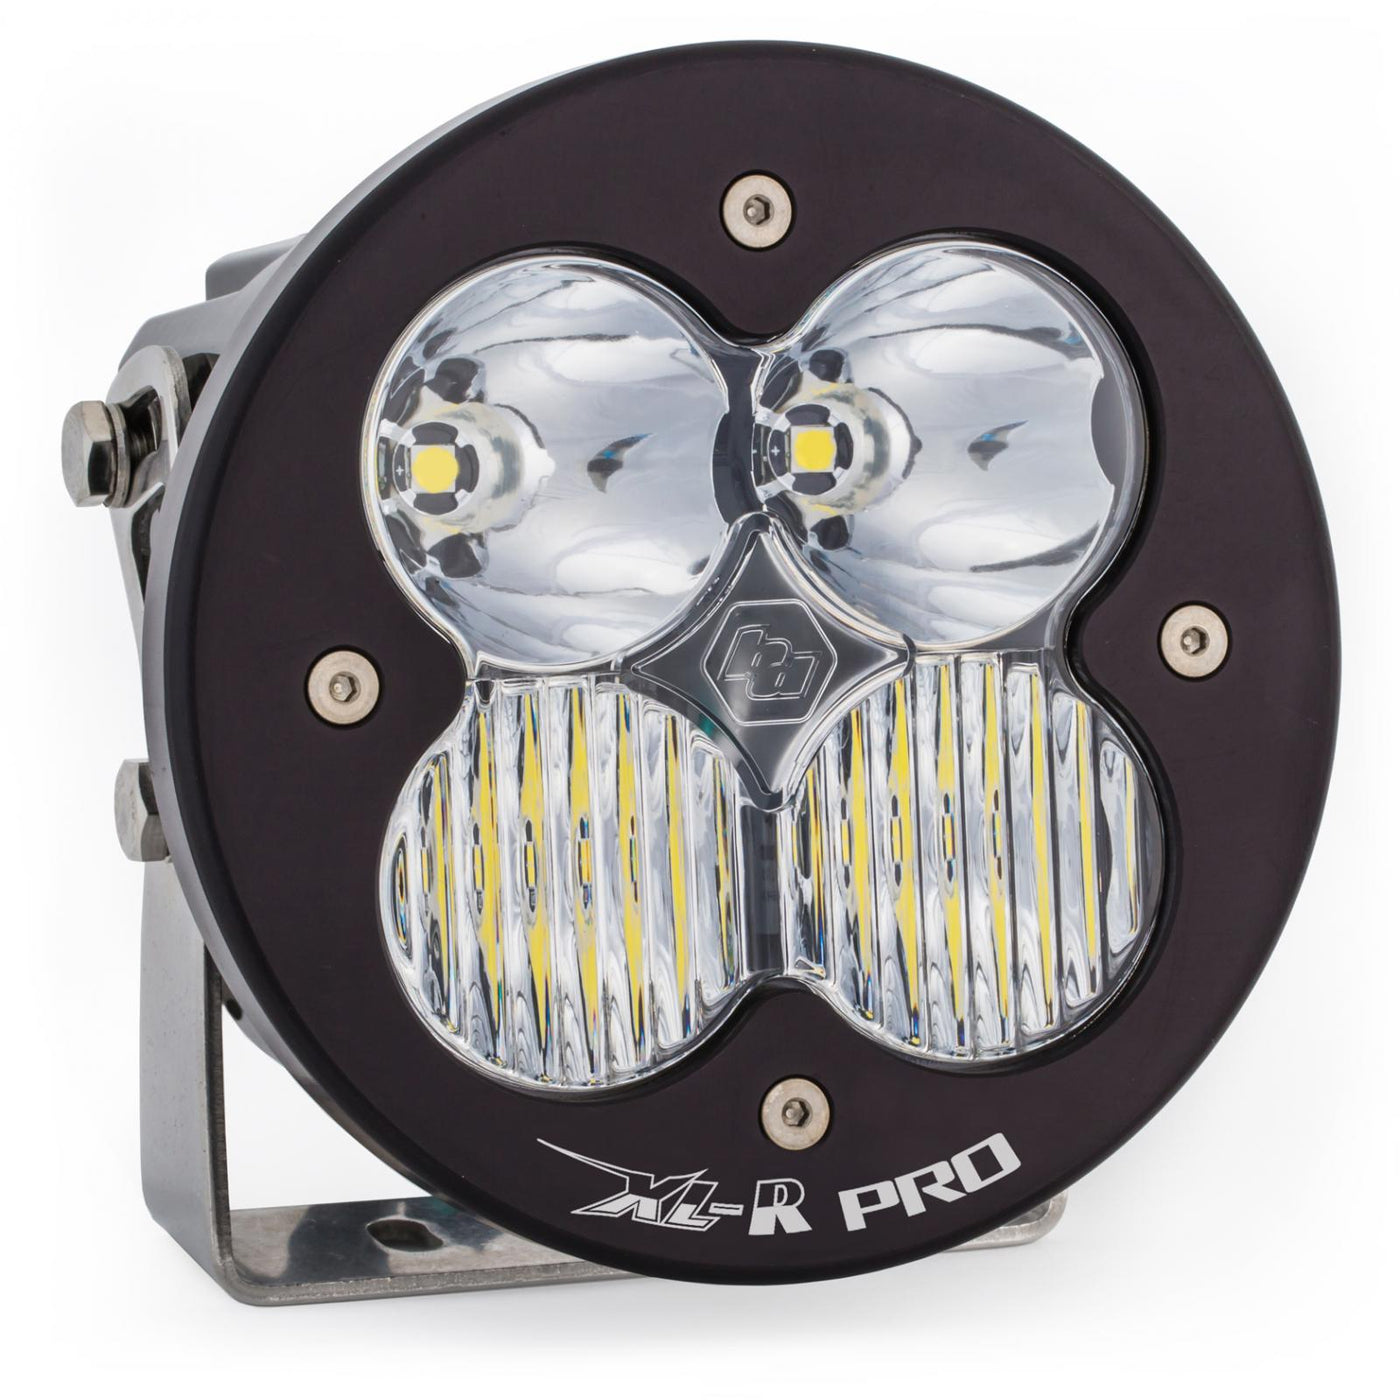 Baja Designs 530003 LED Light Pods Clear Lens Spot XL R Pro DrivingCombo